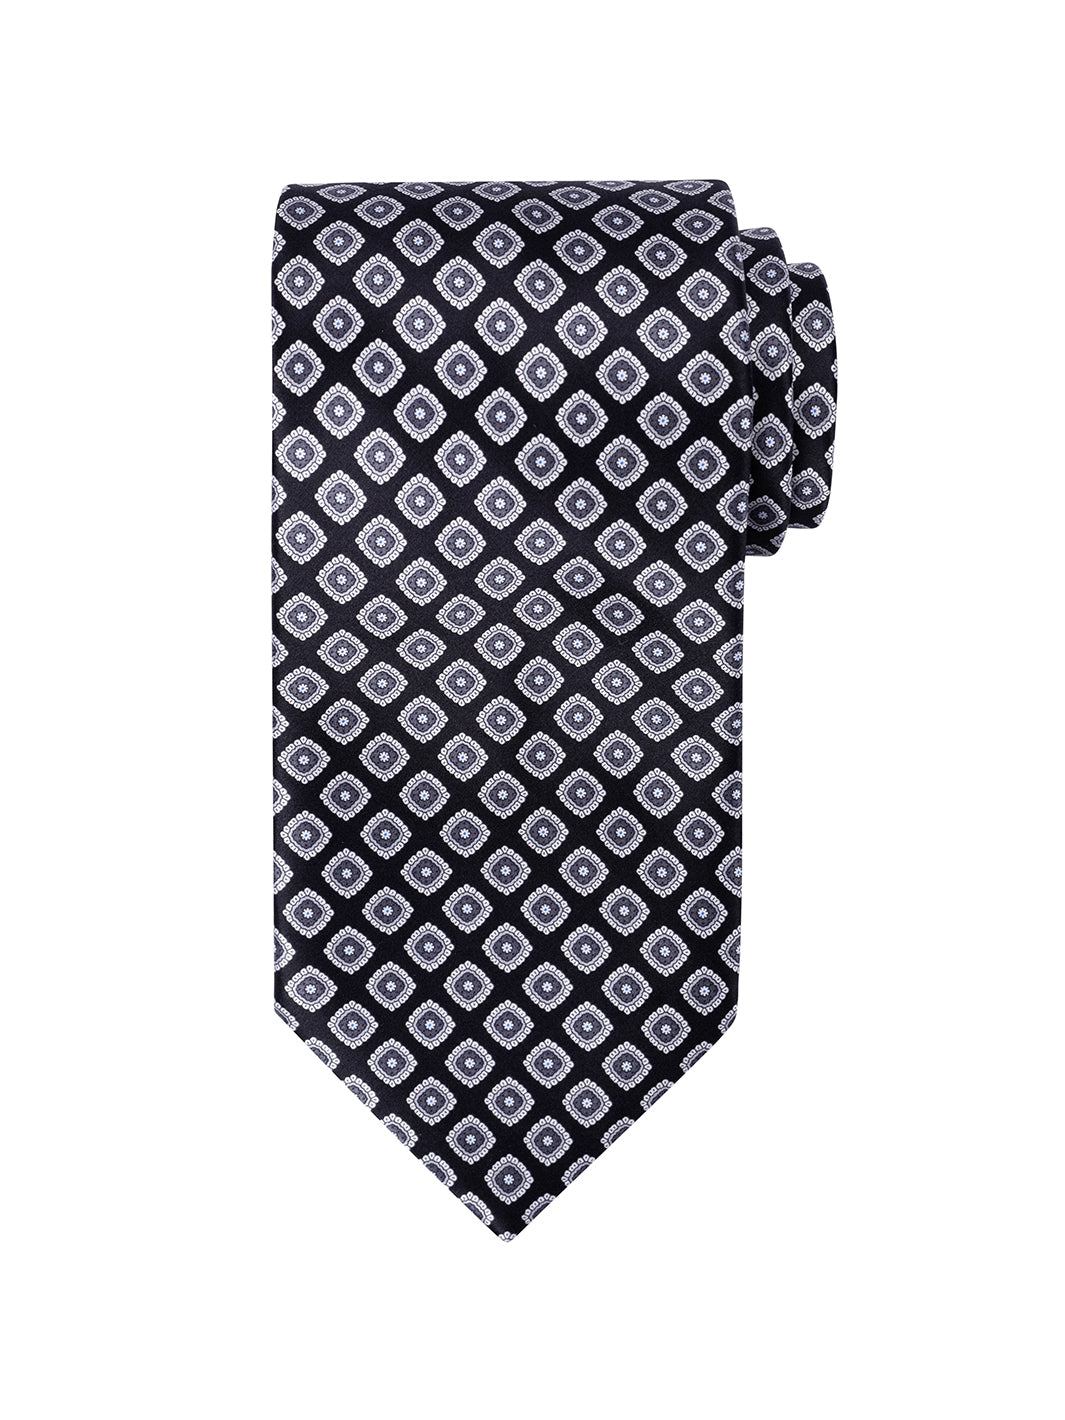 Men's Stefano Ricci Tie - Black and Grey